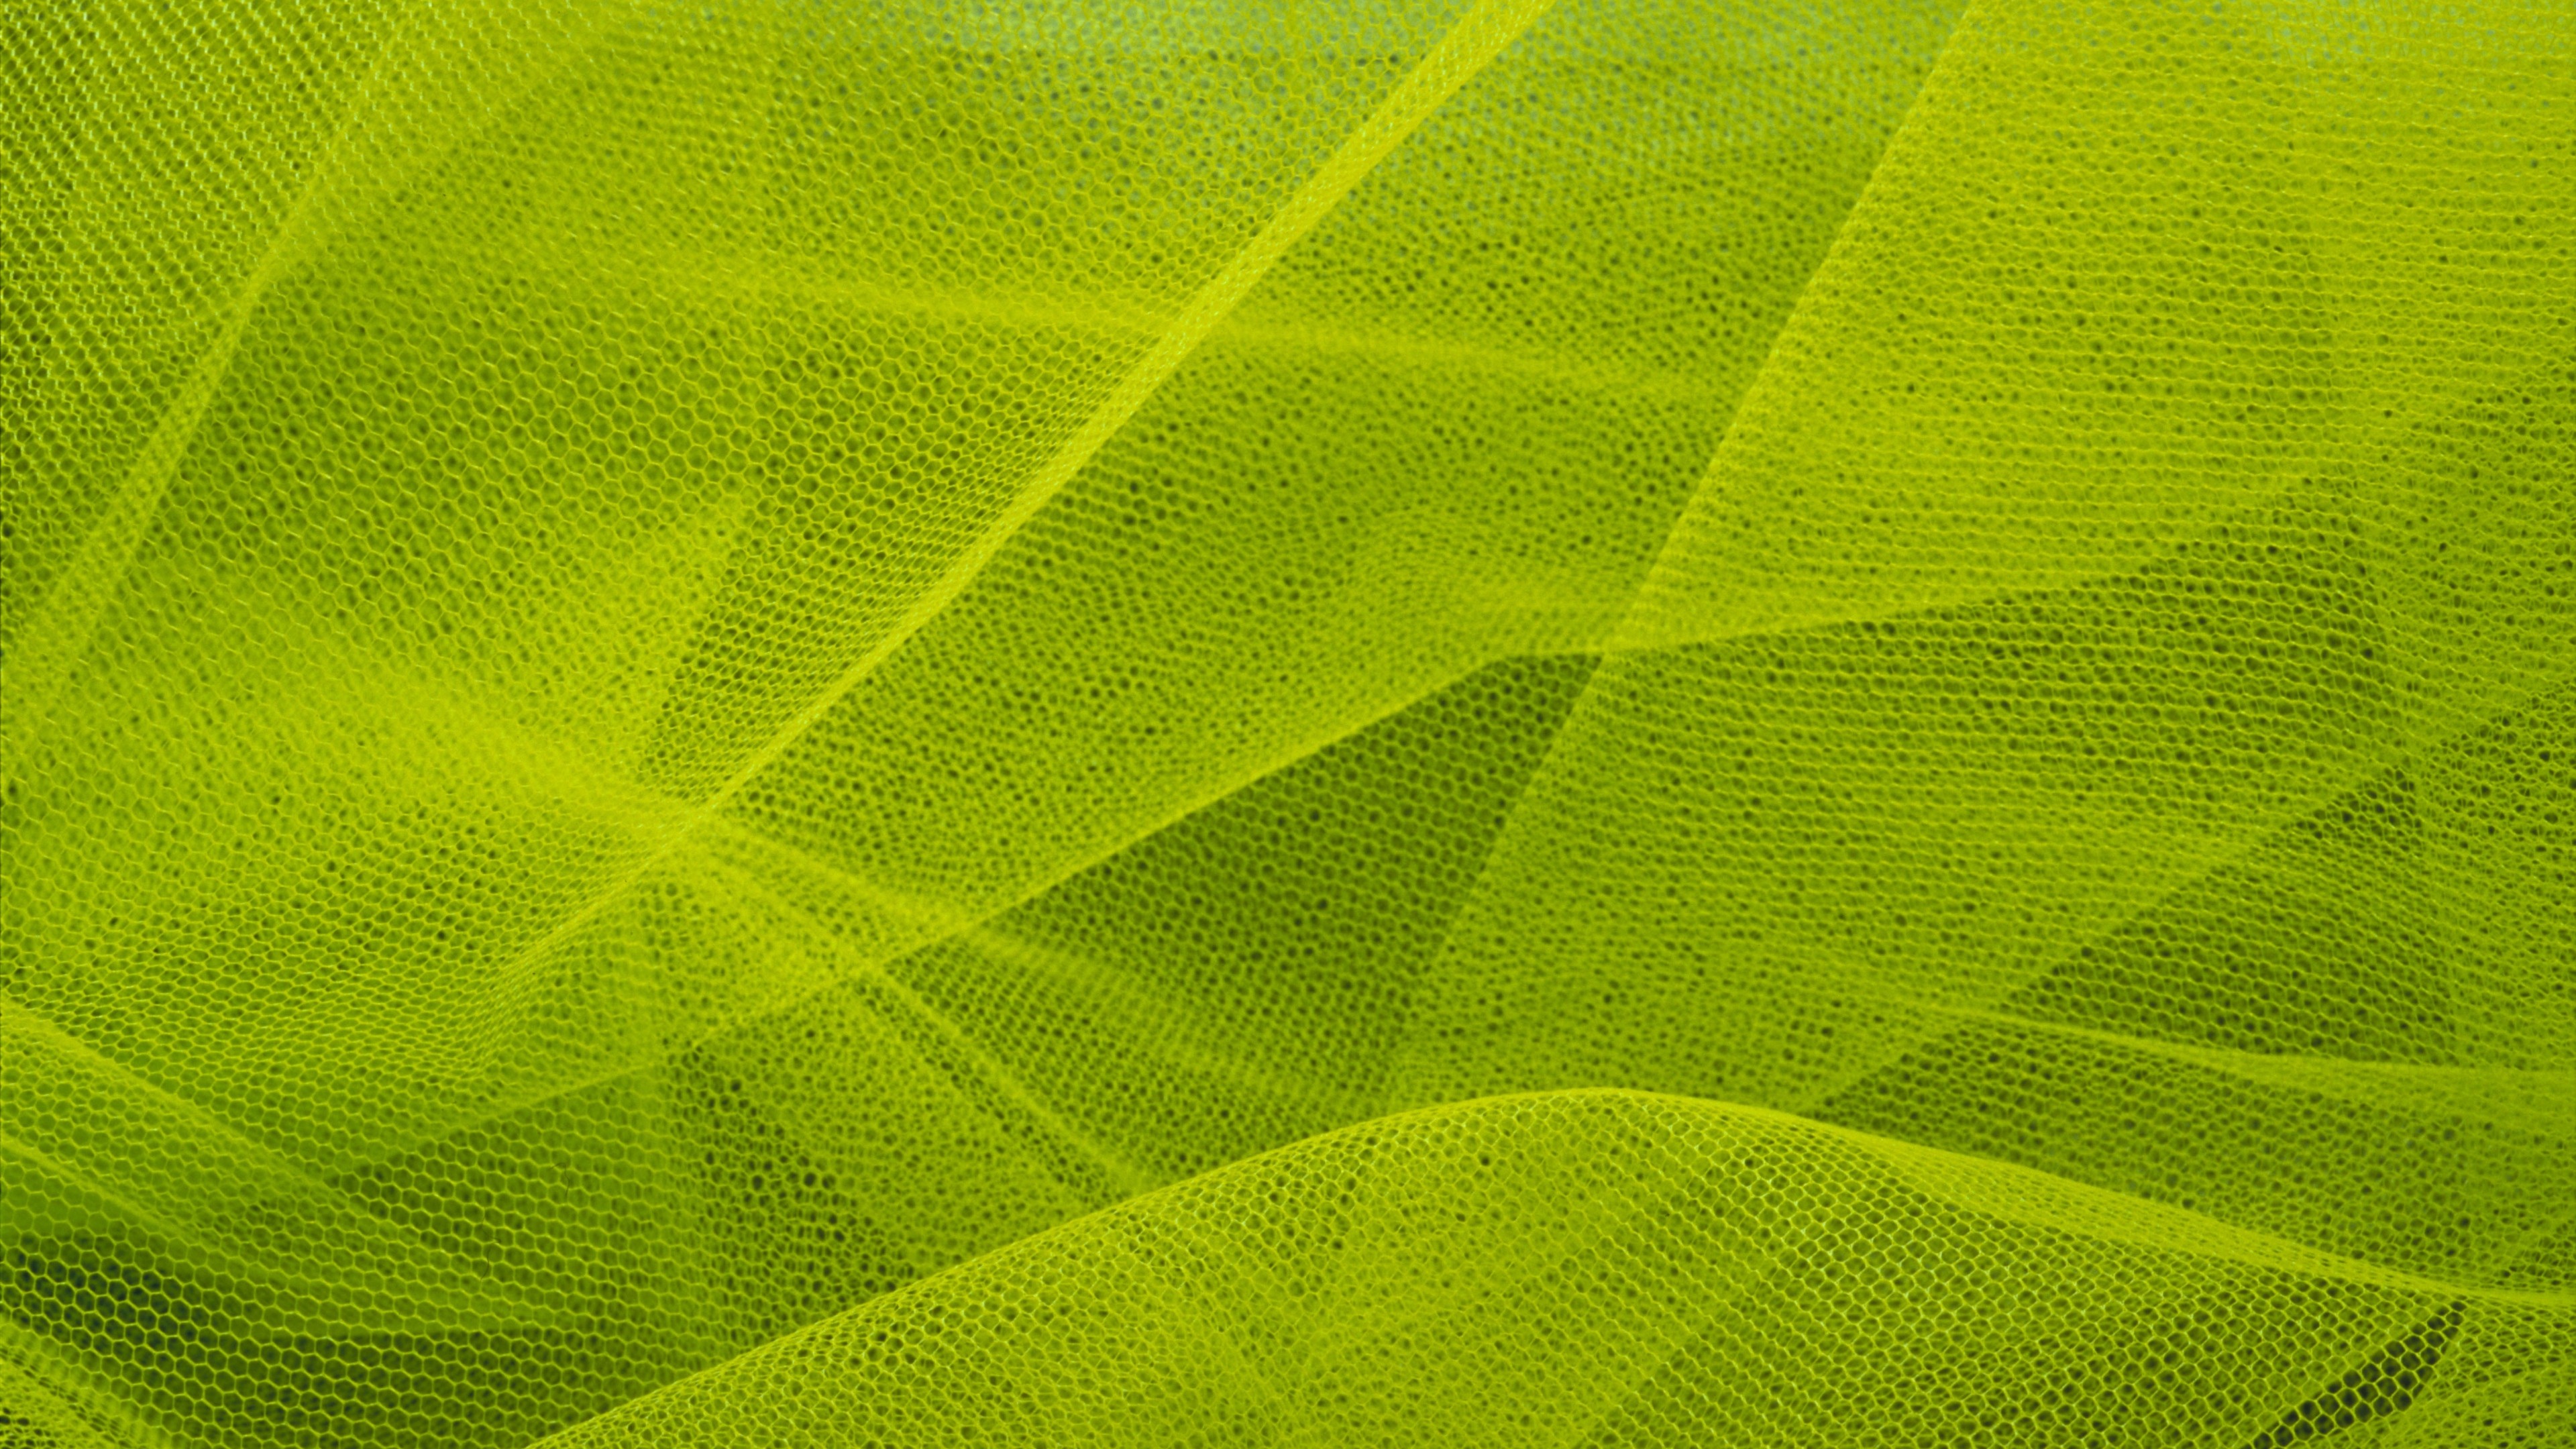 Textil Floral Verde y Blanco. Wallpaper in 3840x2160 Resolution